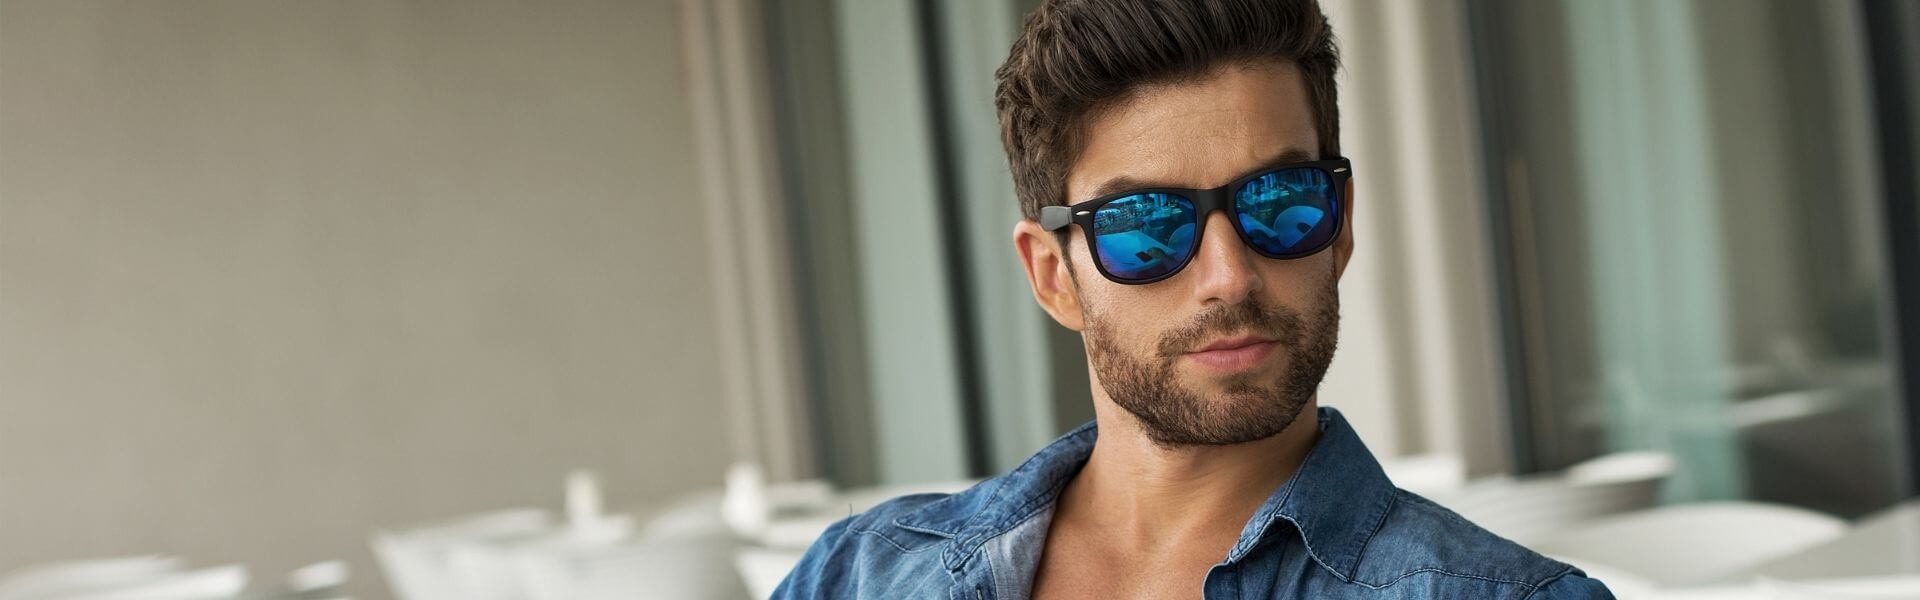 Men's Cool Sunglasses - High Fashion